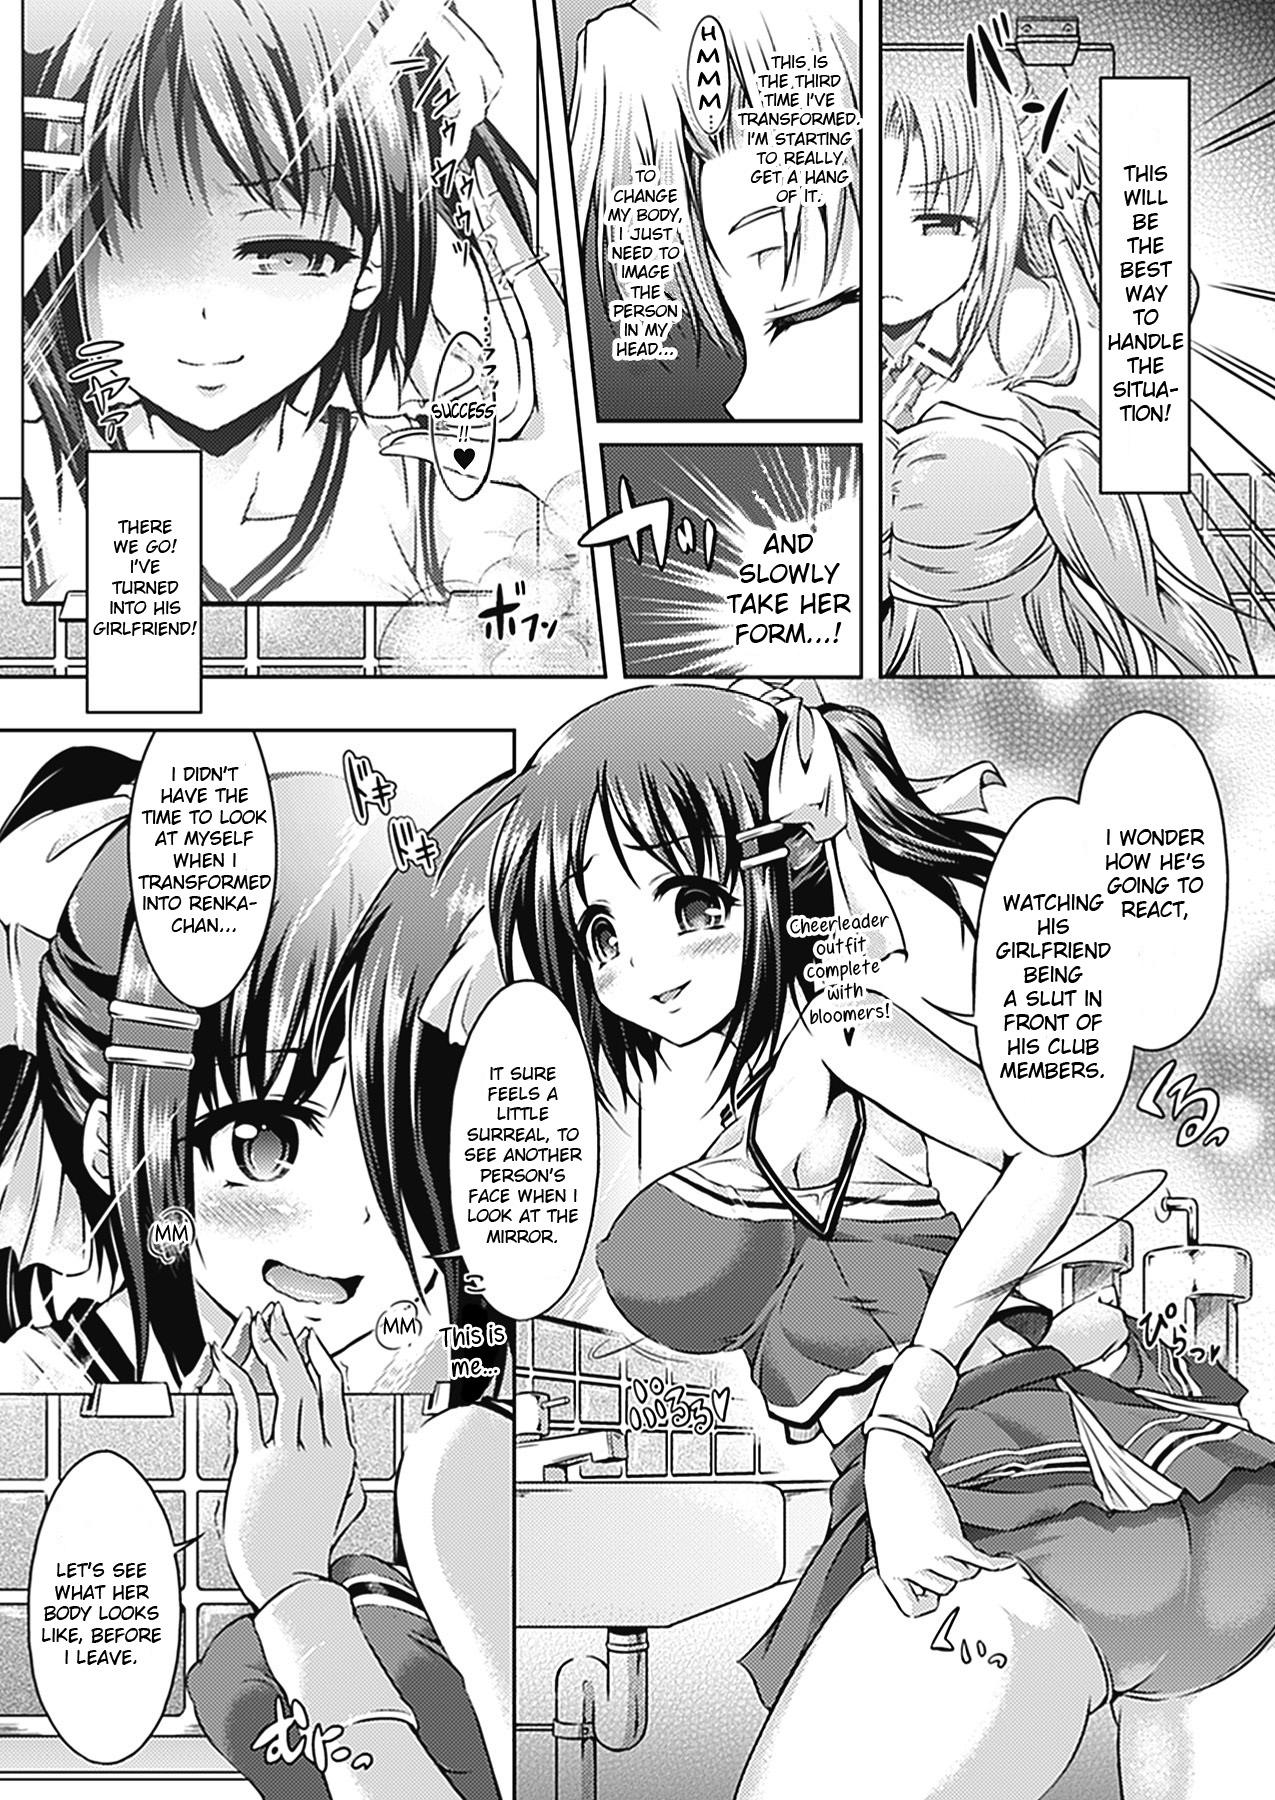 [Taniguchi-san] Girl Play - Trans-Sexual Fiction the Girls Play - ⚤TSF Catalog (English) {doujin-moe.us} 66